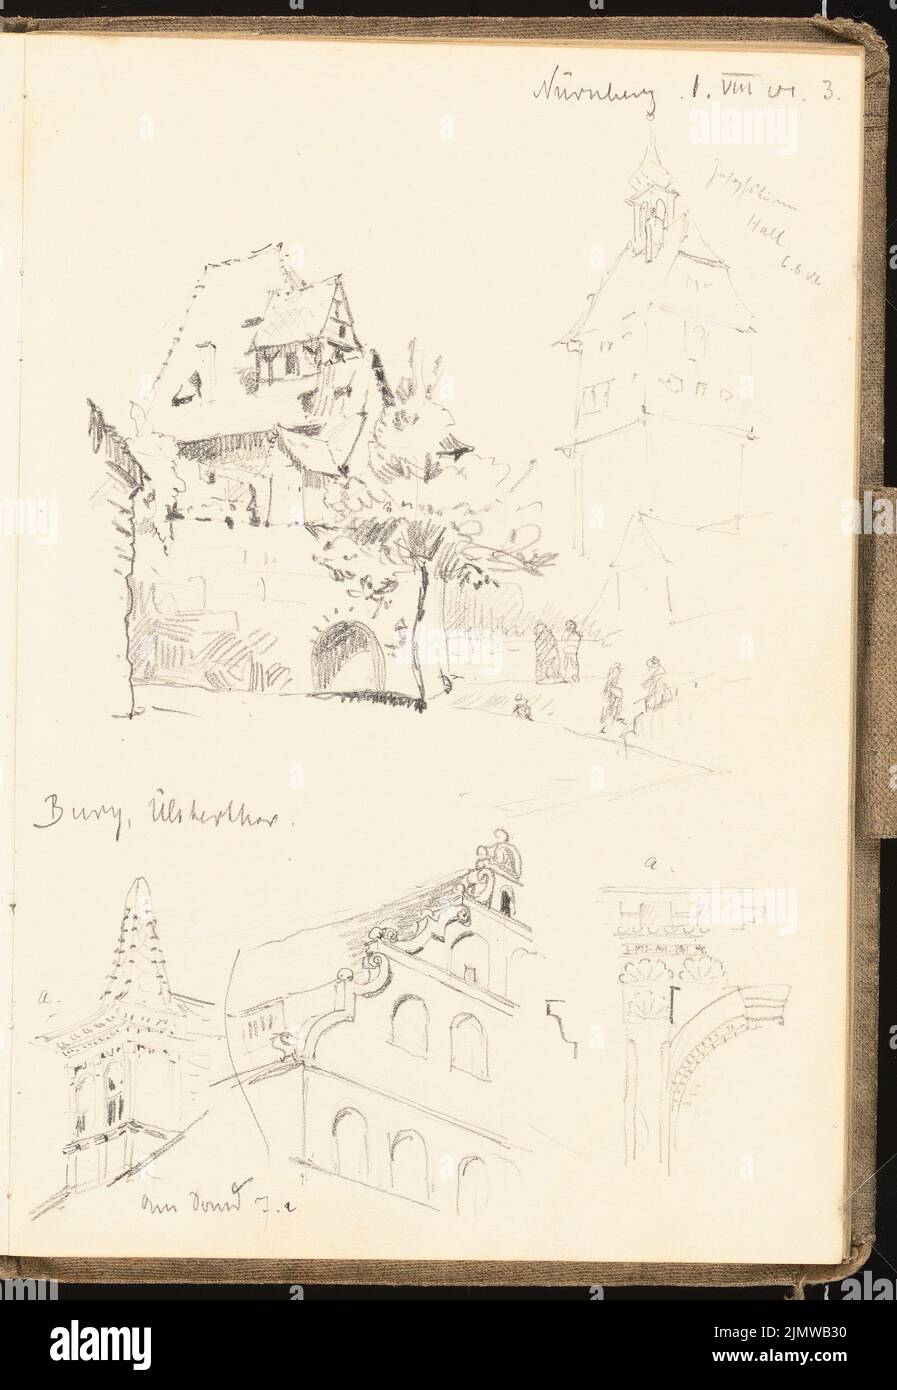 Michel Paul sen. (1877-1938), sketchbook. 1901 (01.08.1901): Burg, town houses in Nuremberg, perspective views, view. Pencil on paper, 24.4 x 16.8 cm (including scan edges) Michel Paul sen.  (1877-1938): Skizzenbuch. 1901 Stock Photo